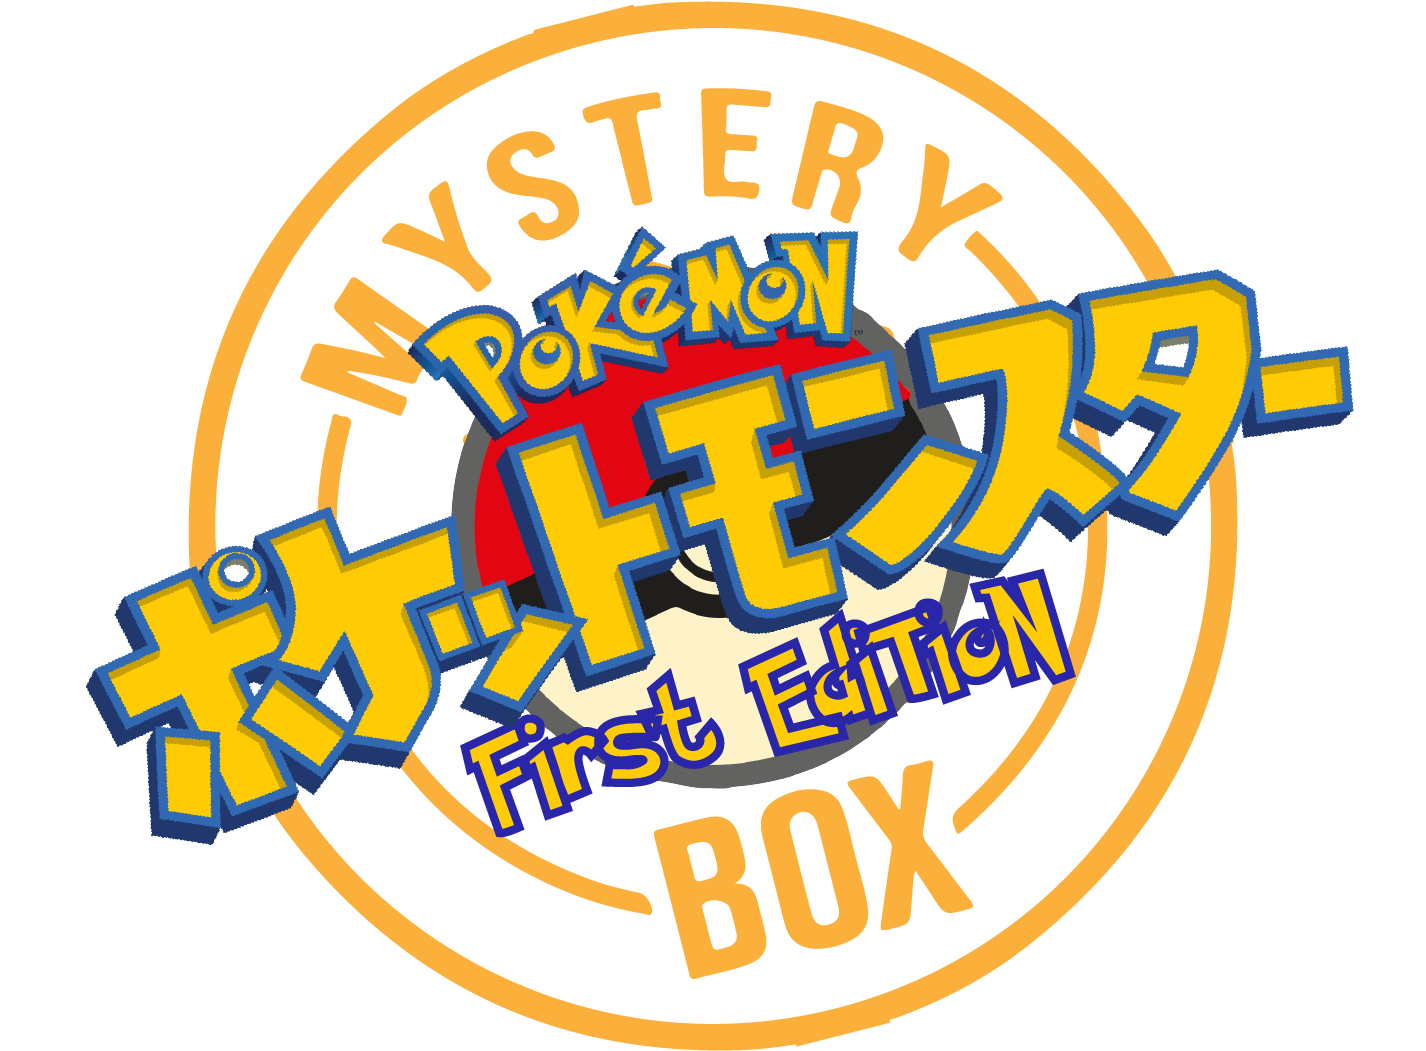 1996 FIRST EDITION JAPANESE Pokémon Pocket Monster Cards Mystery bundle 5 cards per Pack